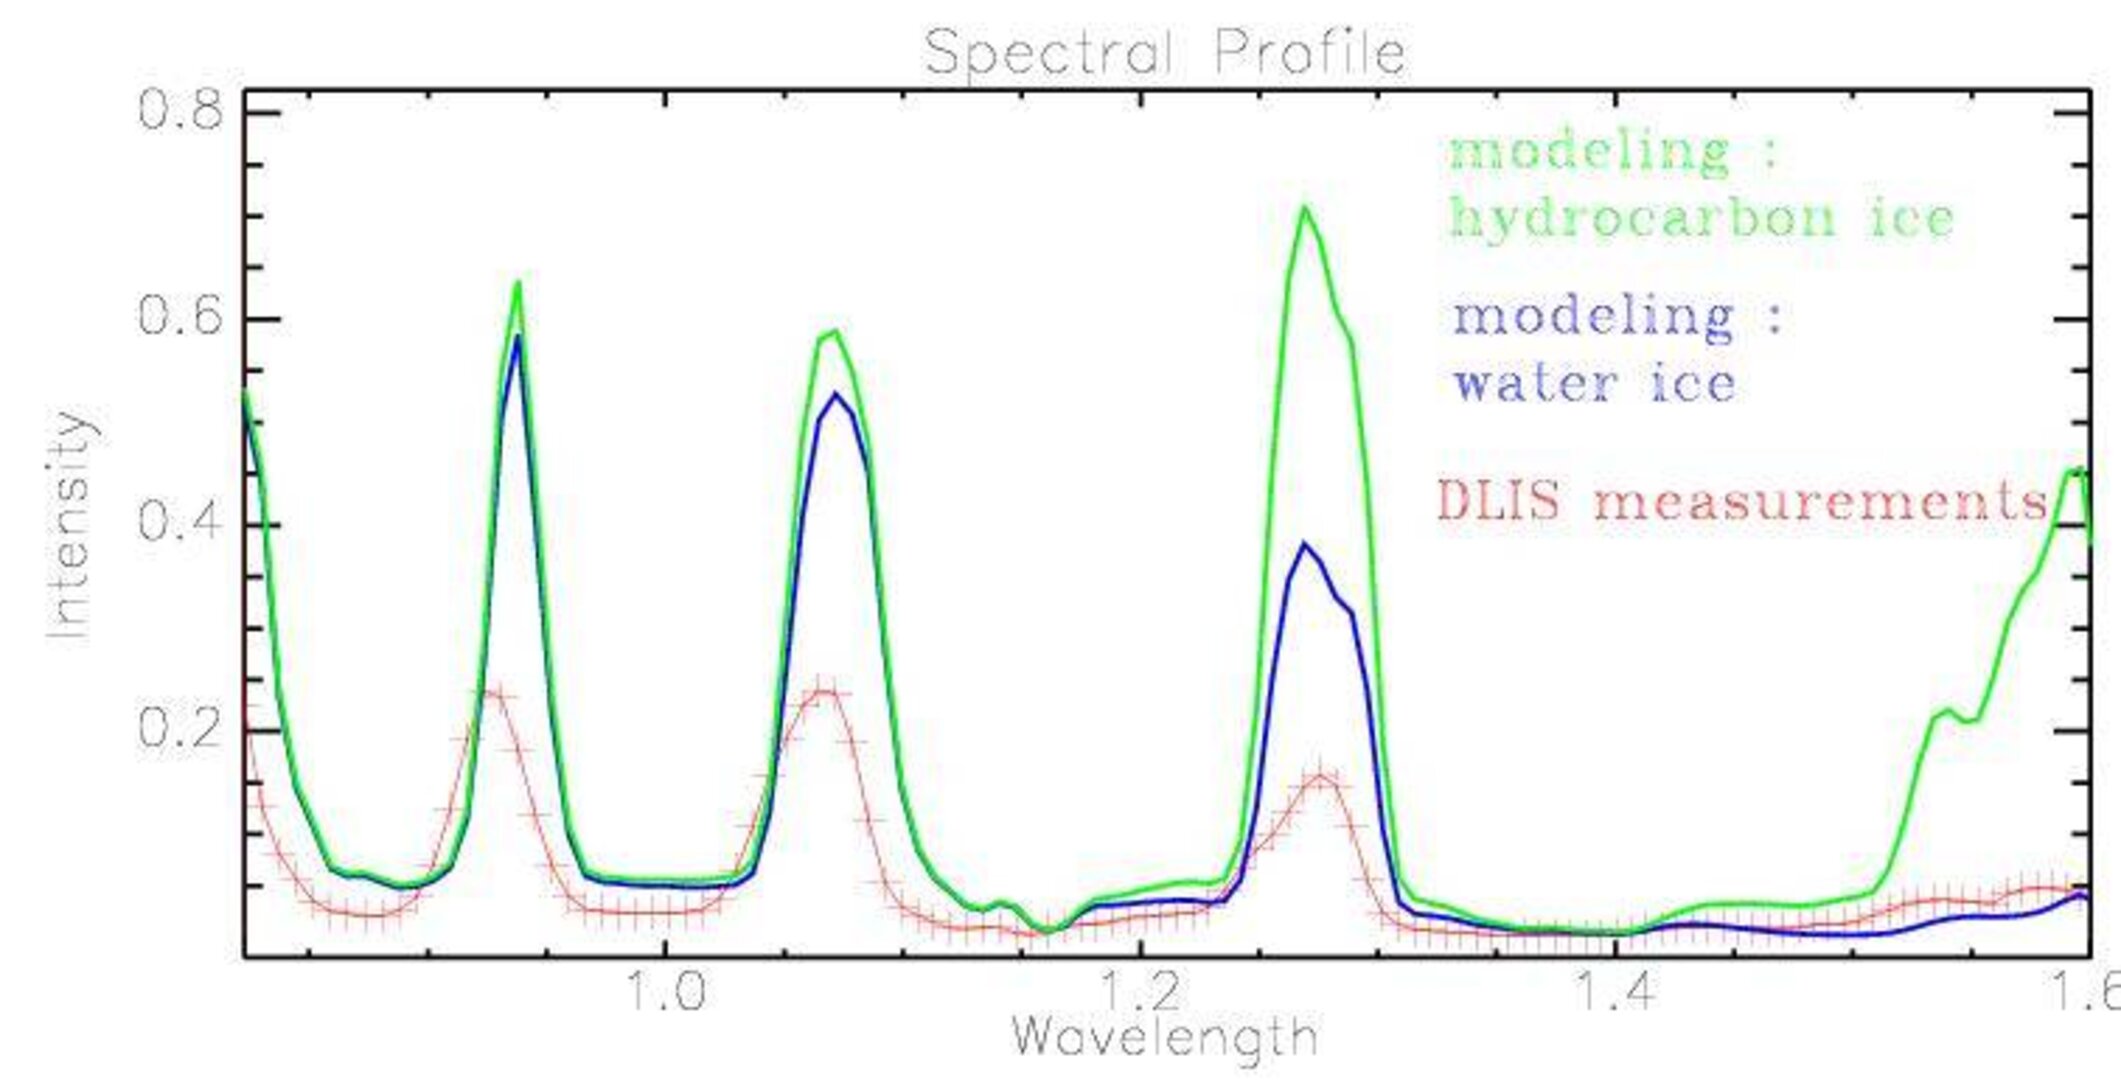 Spectrum returned by DISR instrument